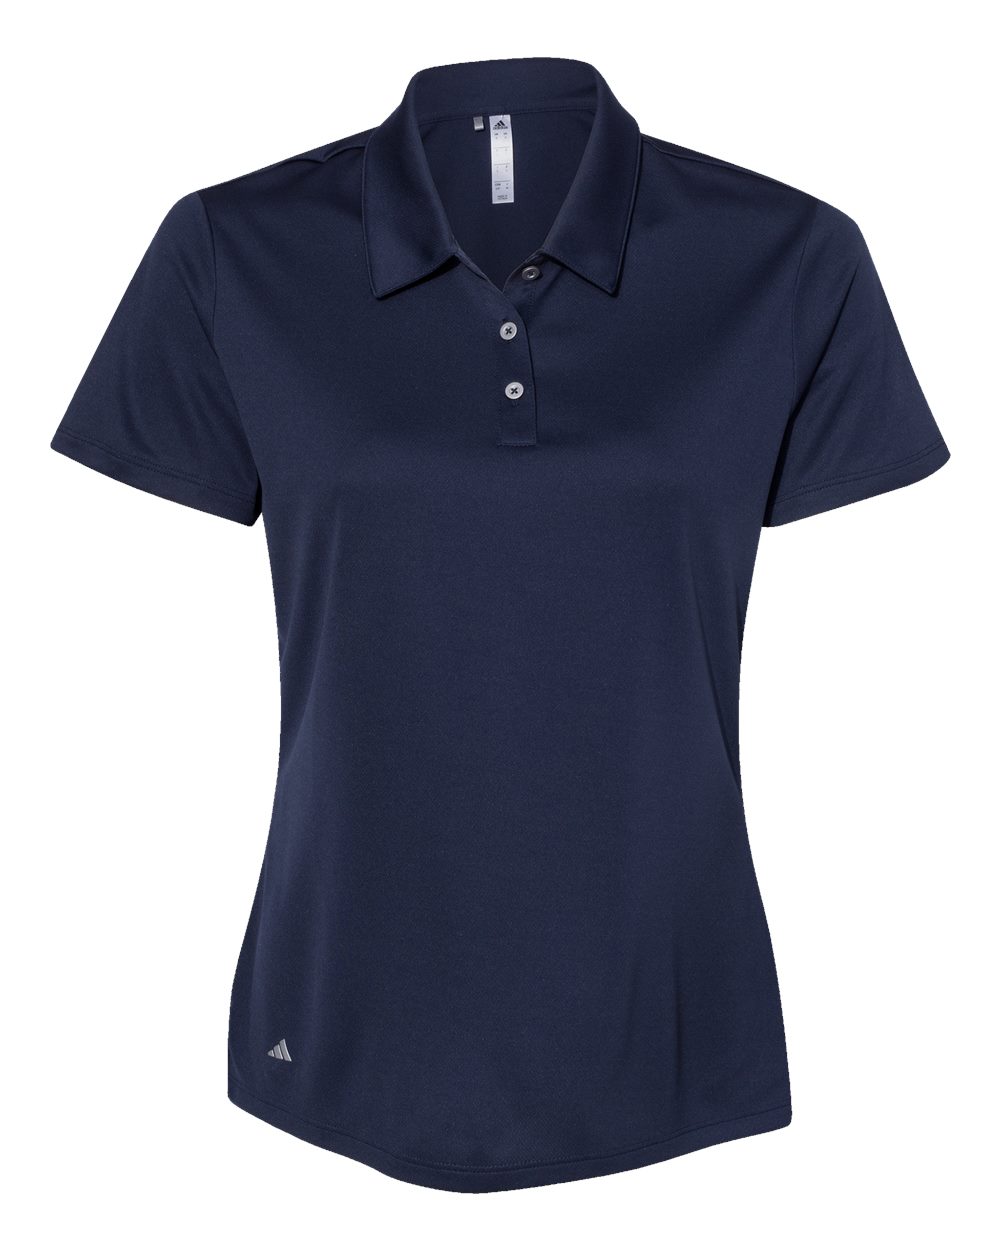 Adidas Women's Performance Sport Shirt Polo Collar A231 up to 3XL | eBay